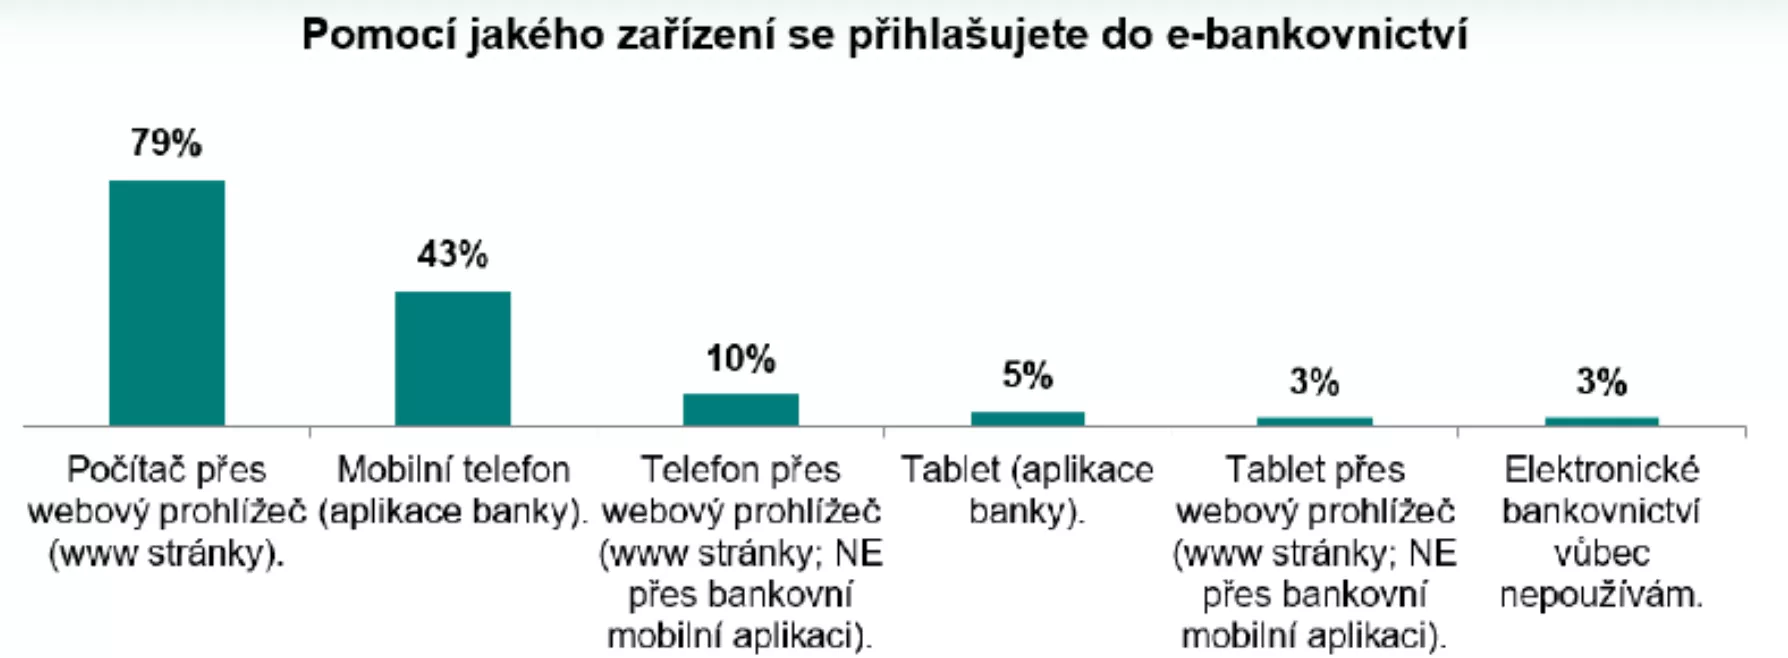 Graf prihlasovani do e-bankovnictvi